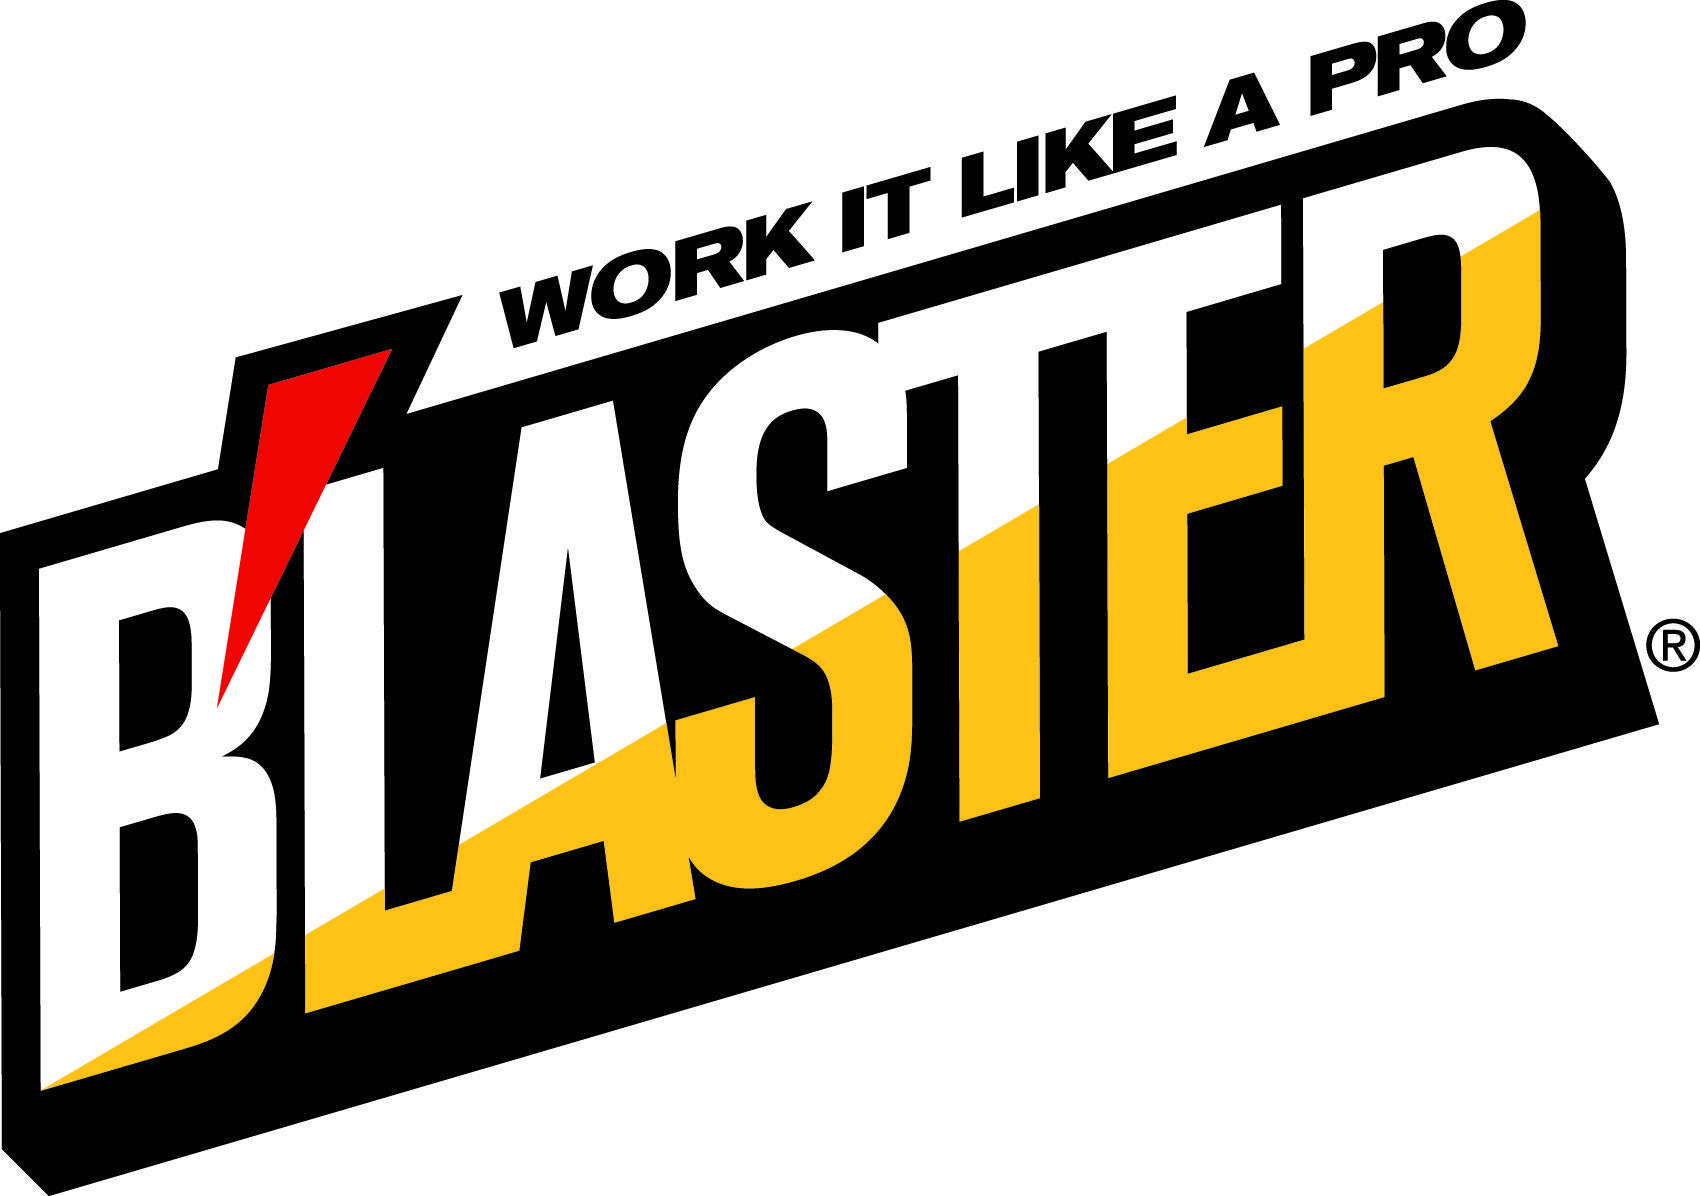 Blaster Logo - Logo Artwork Downloads | The B'laster Corporation